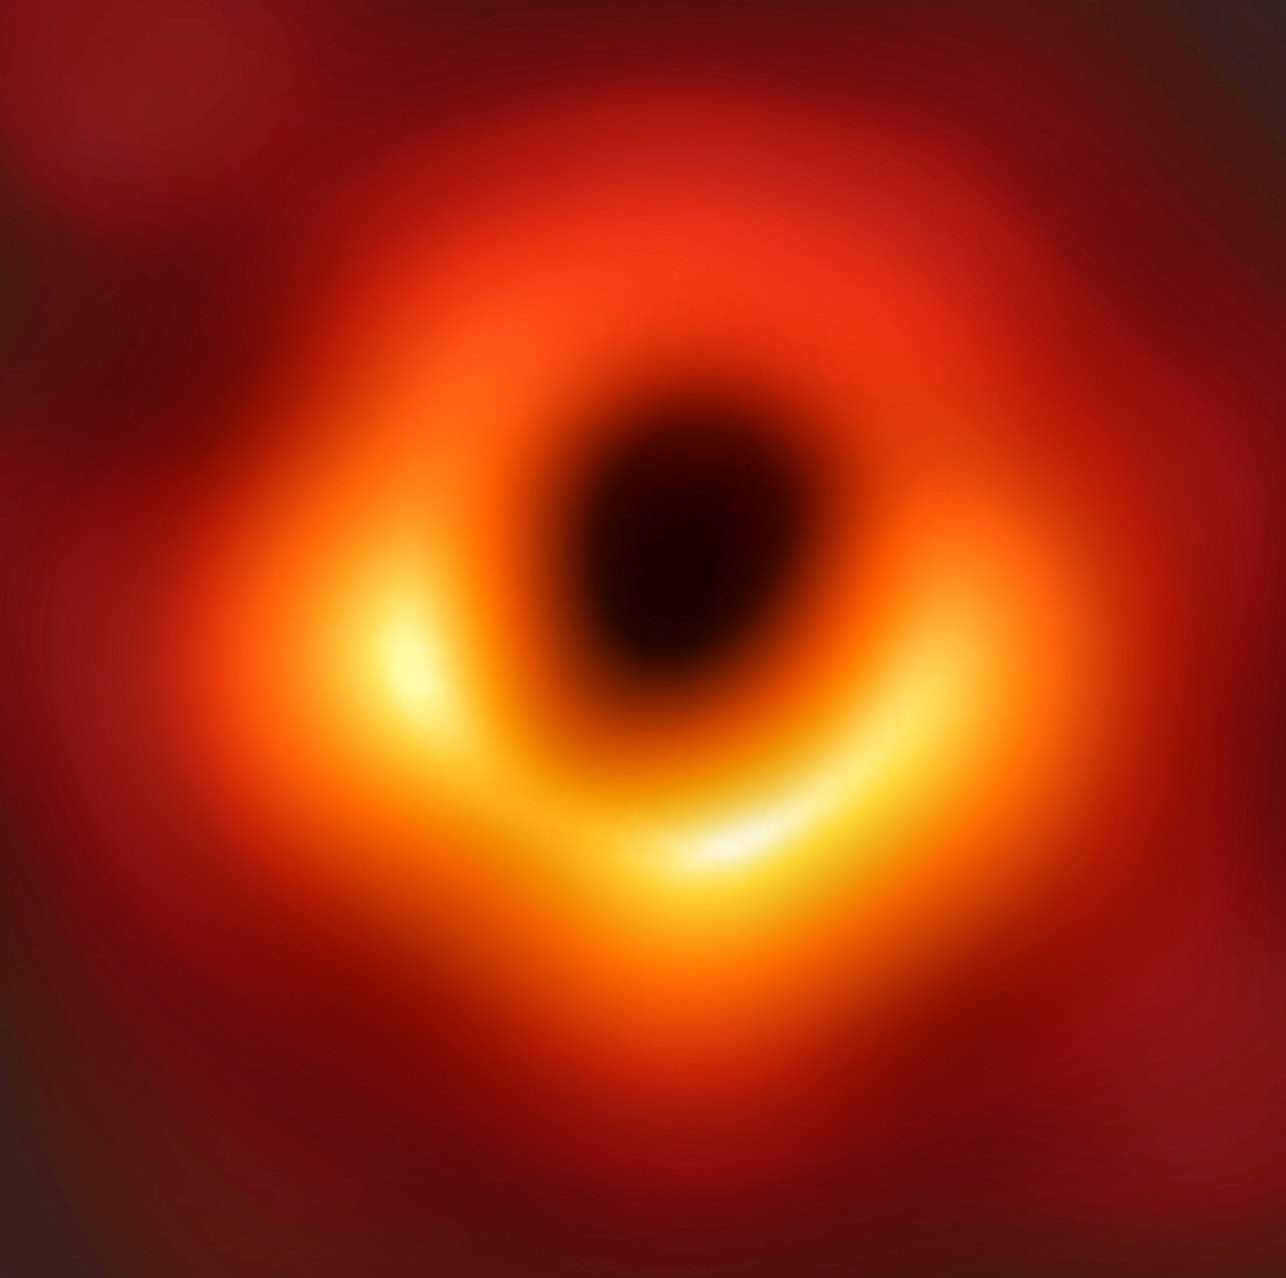 Event Horizon Telescope (EHT) of the supermassive blackhole in the center of M87